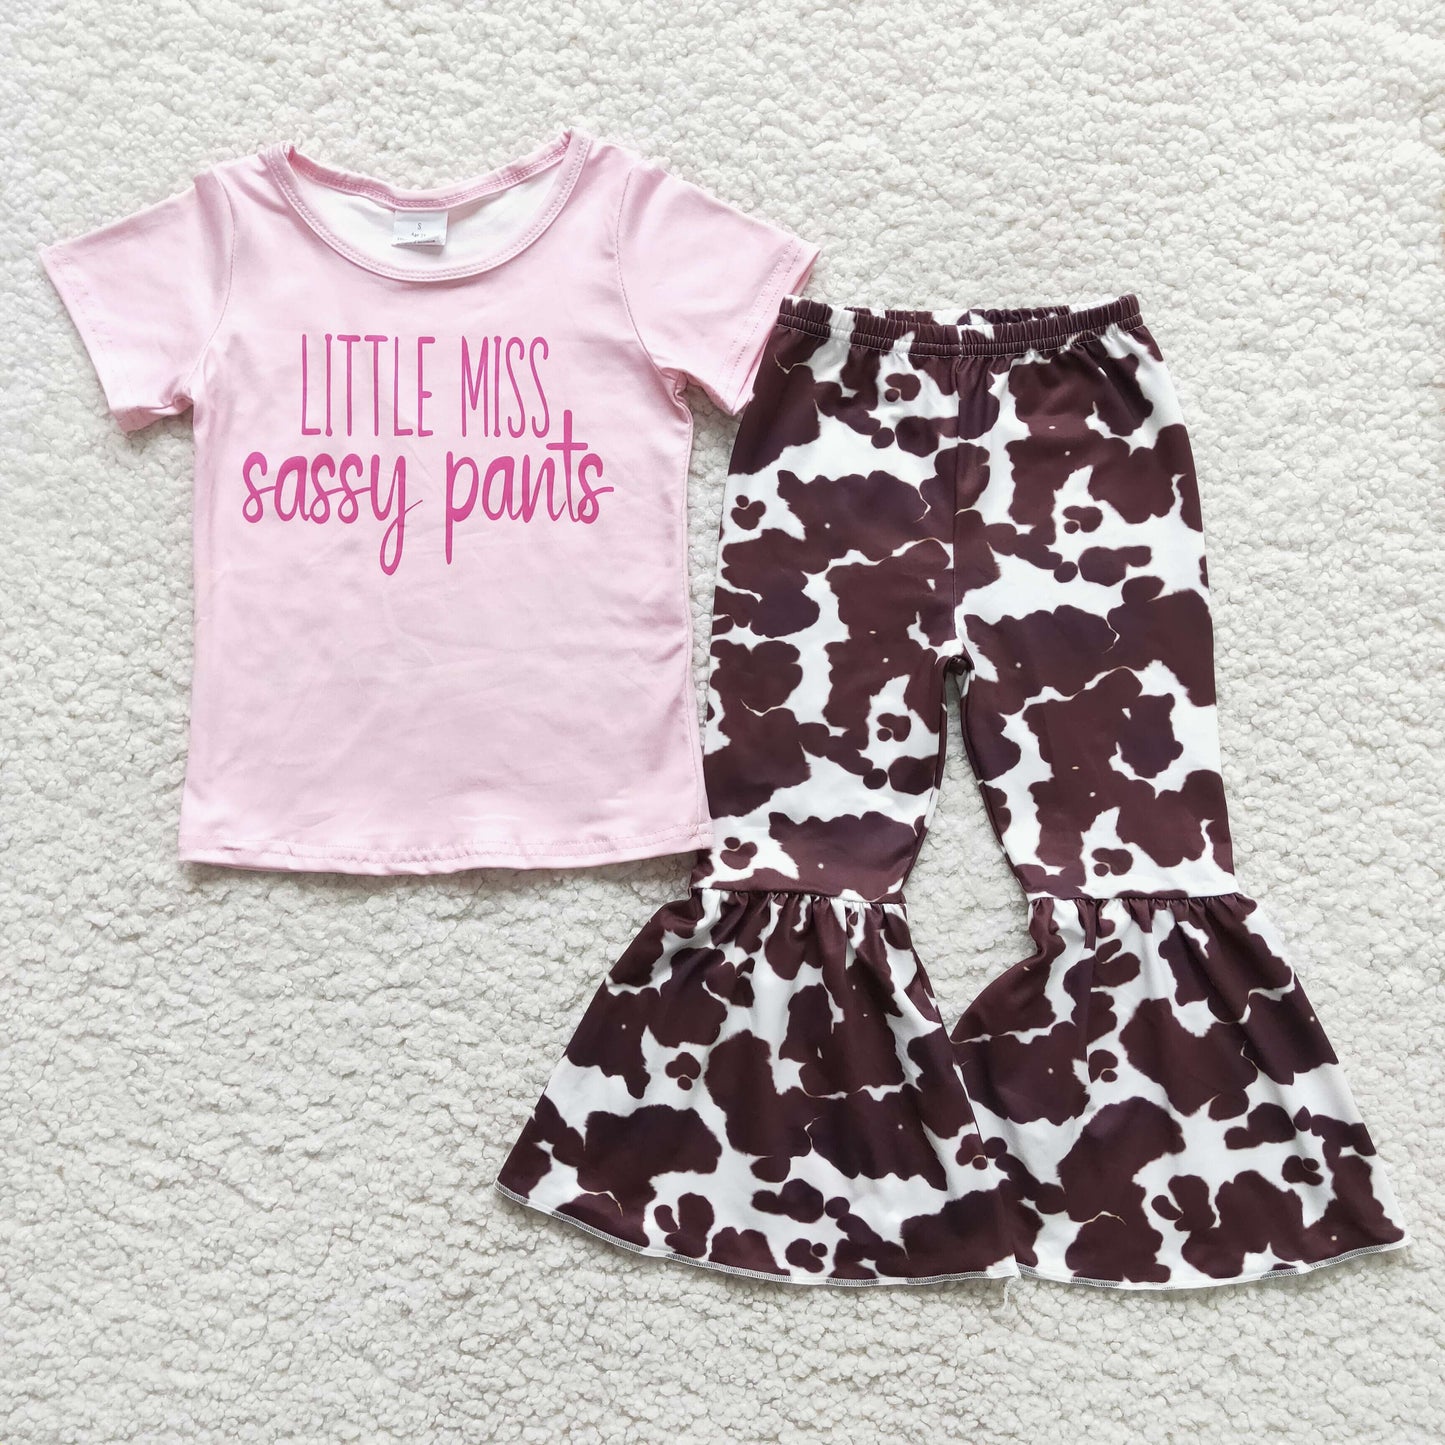 Little miss sassy pants set